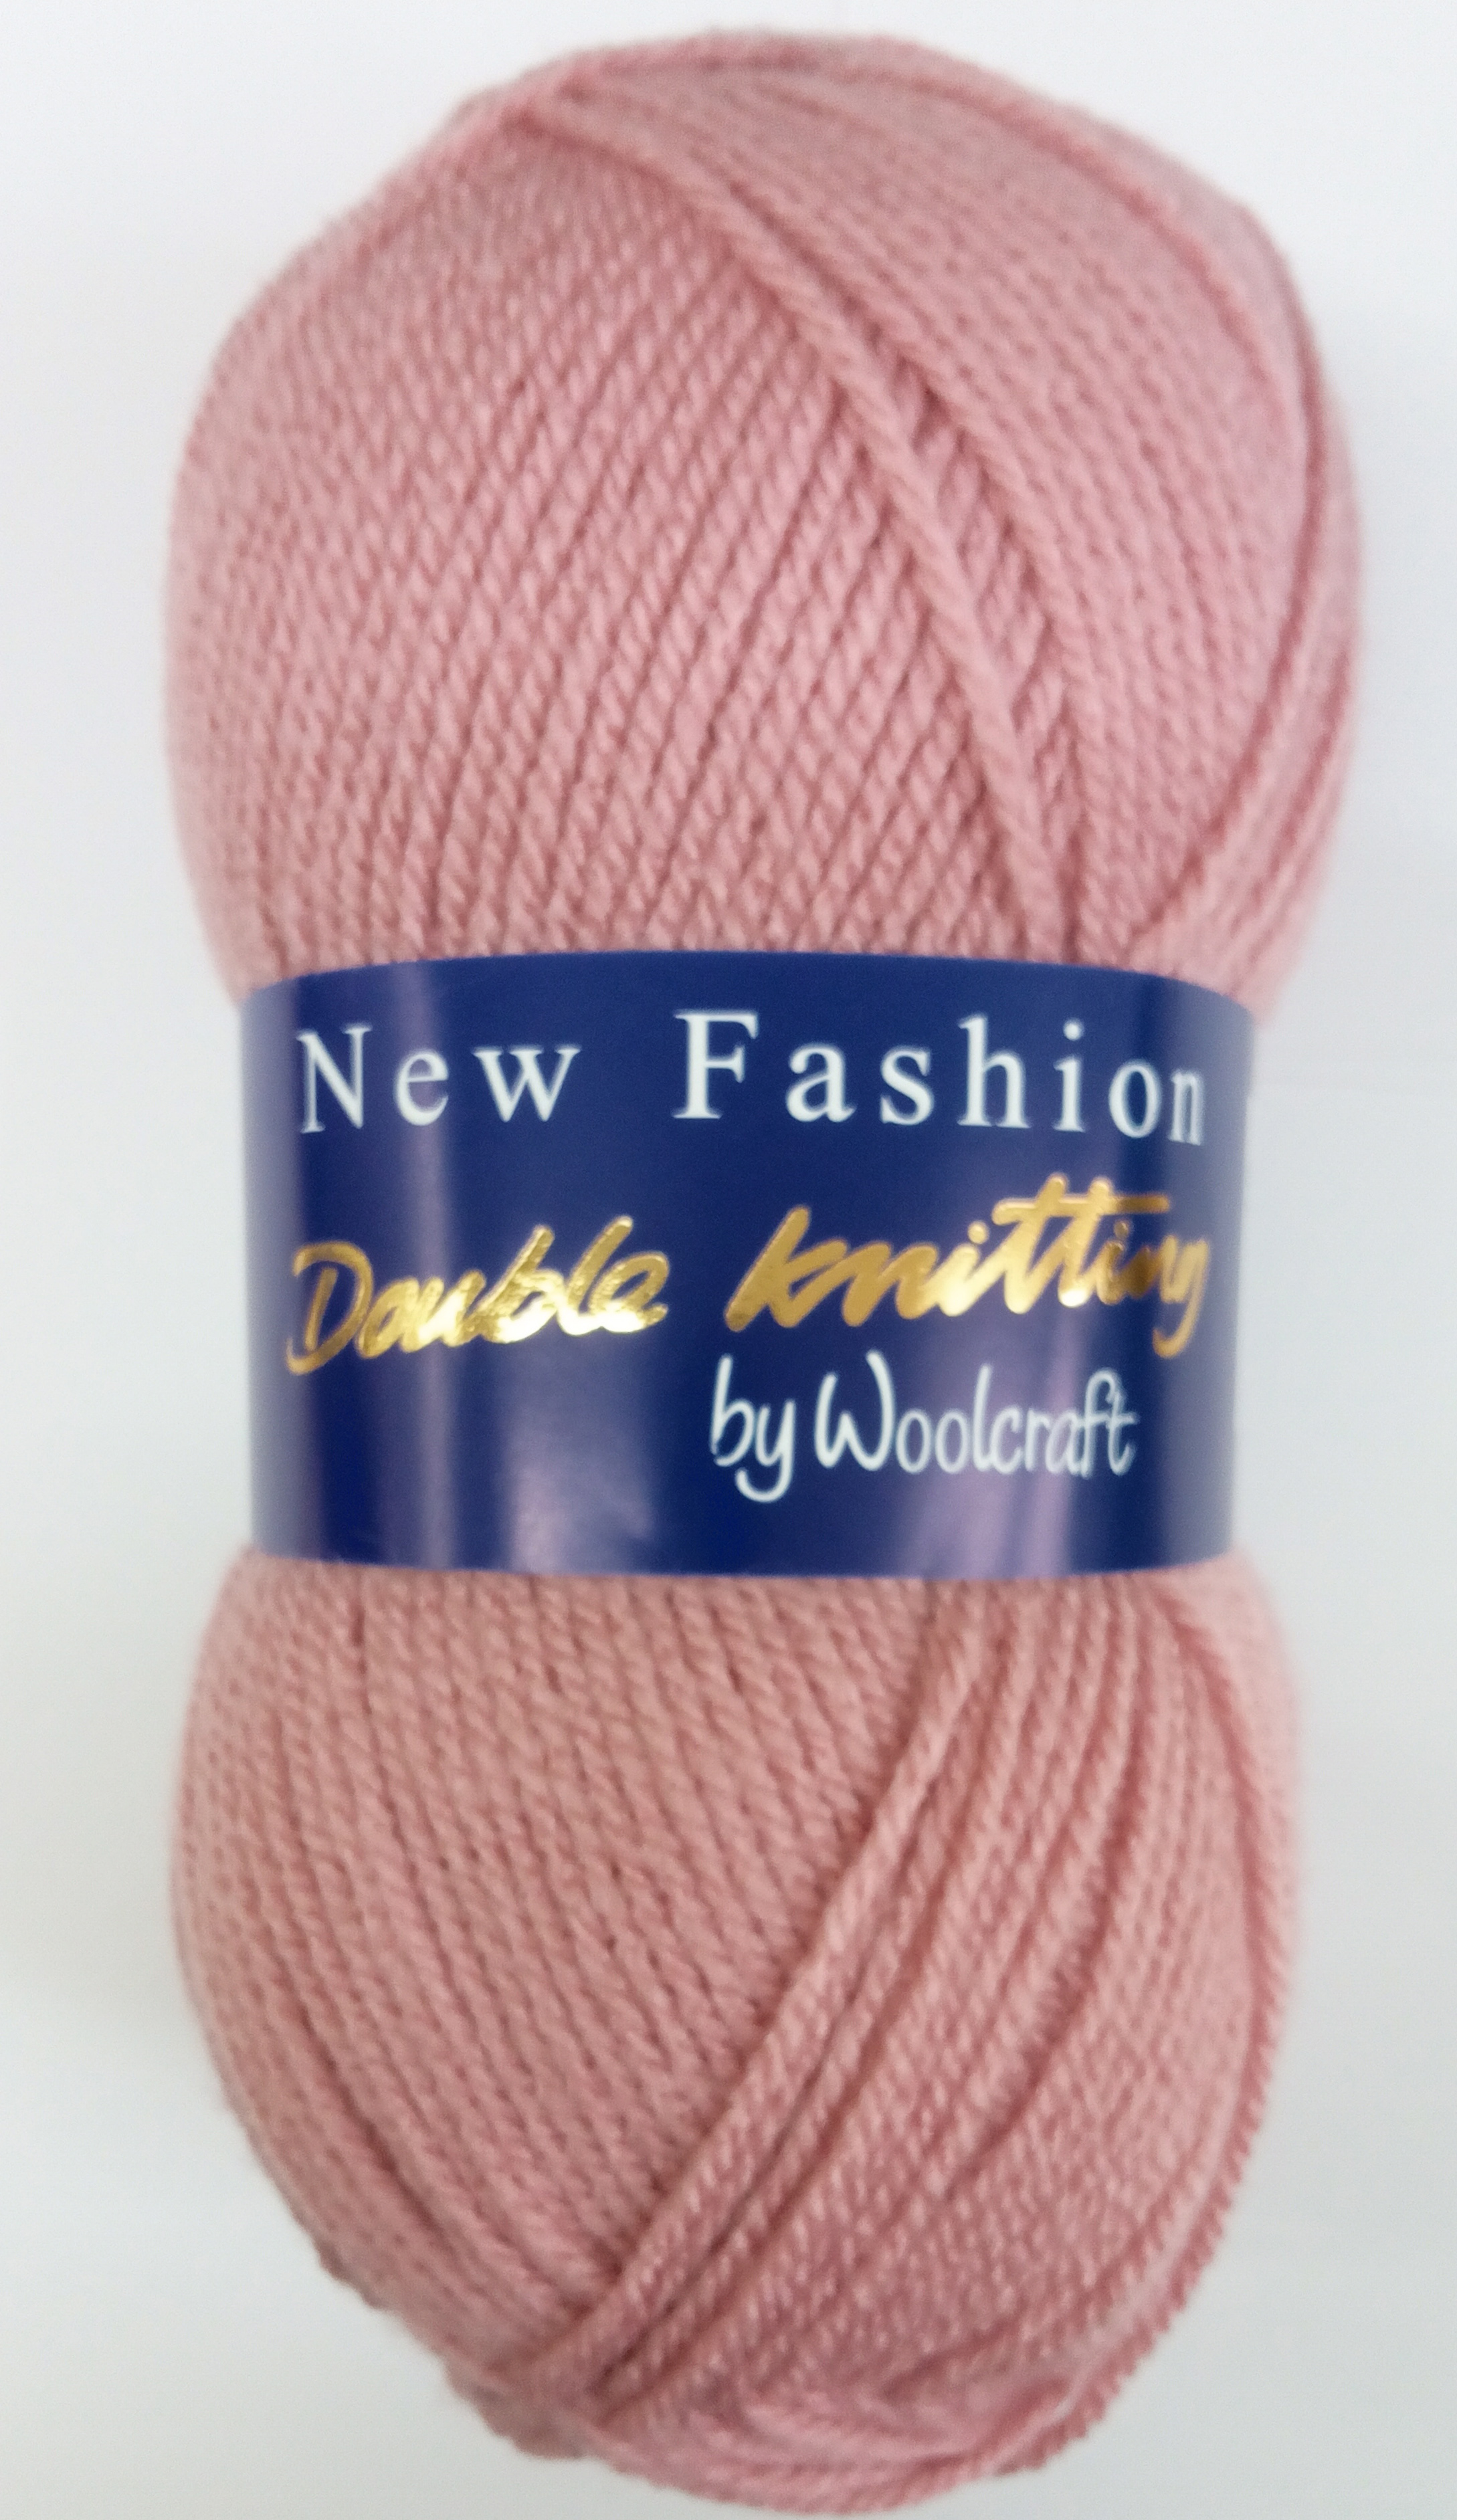 New Fashion DK Yarn 10 Pack Pale Rose 202